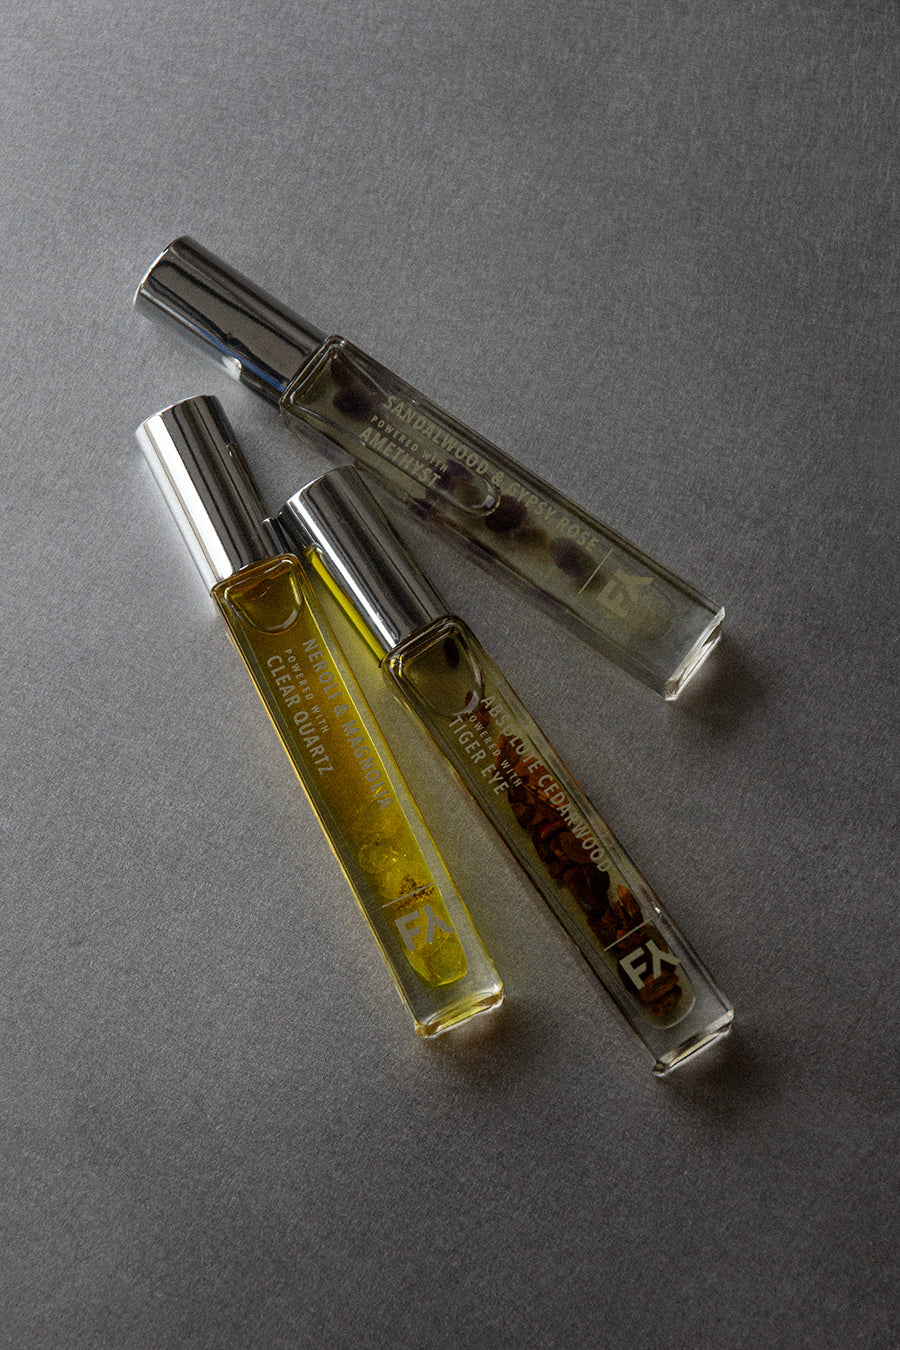 Perfume Oil / Neroli & Magnolia